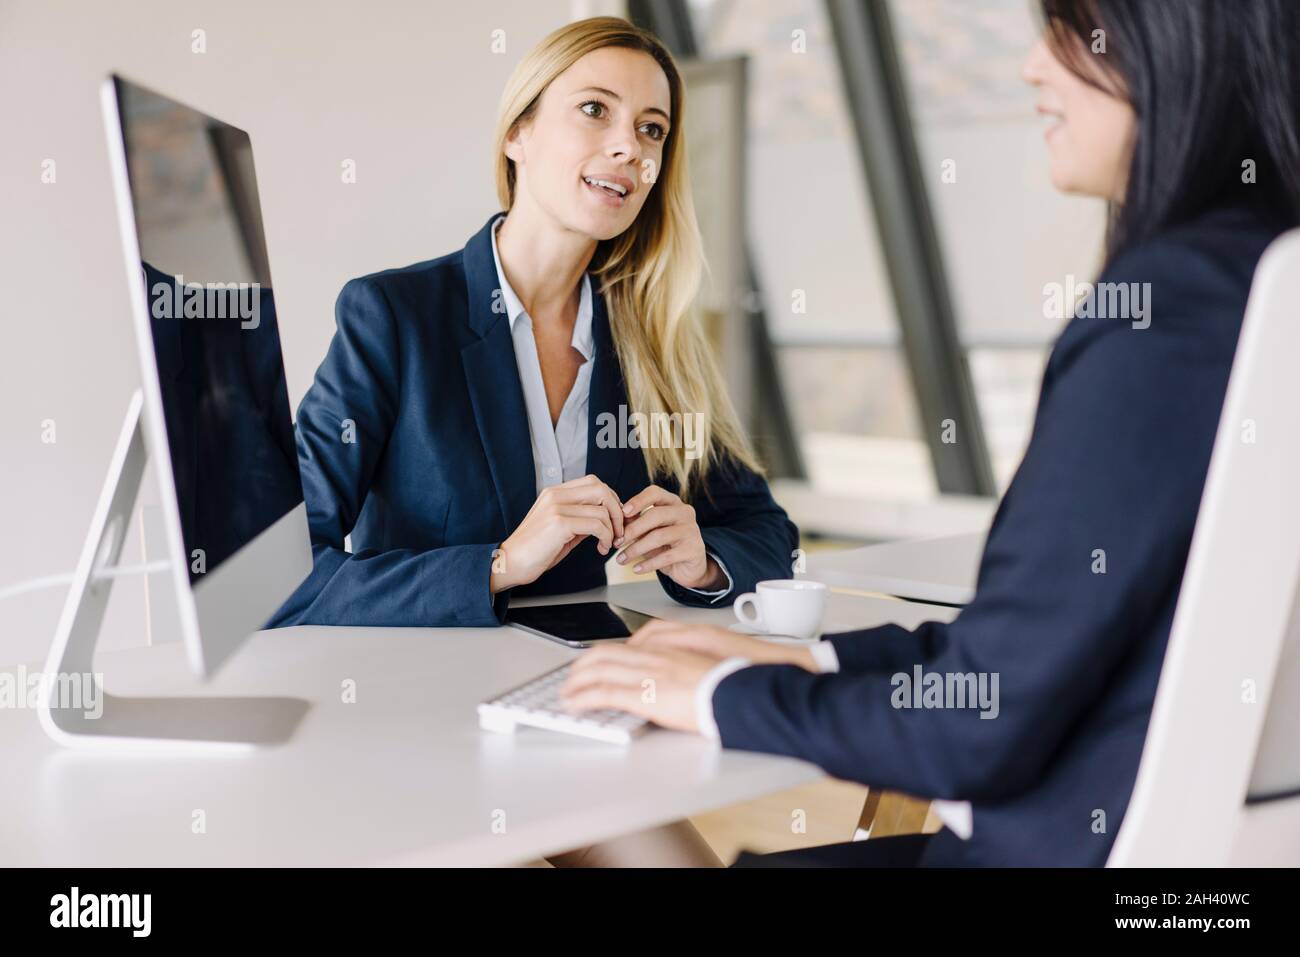 Two businesswomen sitting at desk in office talking Stock Photo